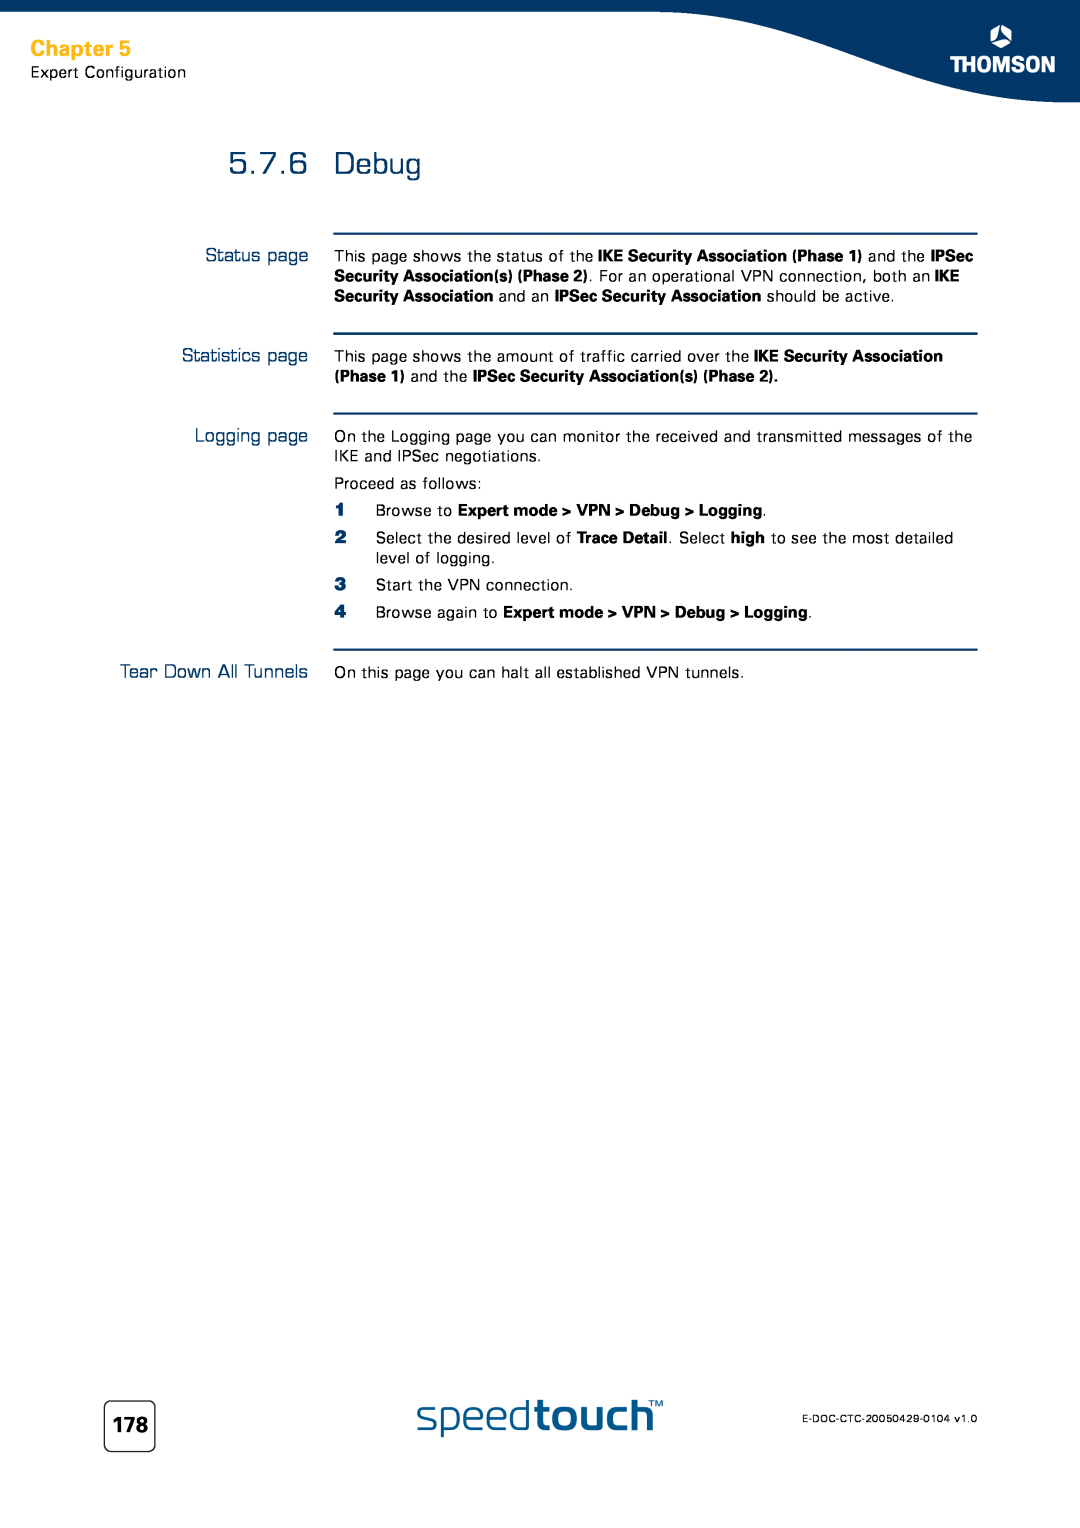 Technicolor - Thomson 620, 605, 608 WL manual Chapter, Browse to Expert mode VPN Debug Logging 